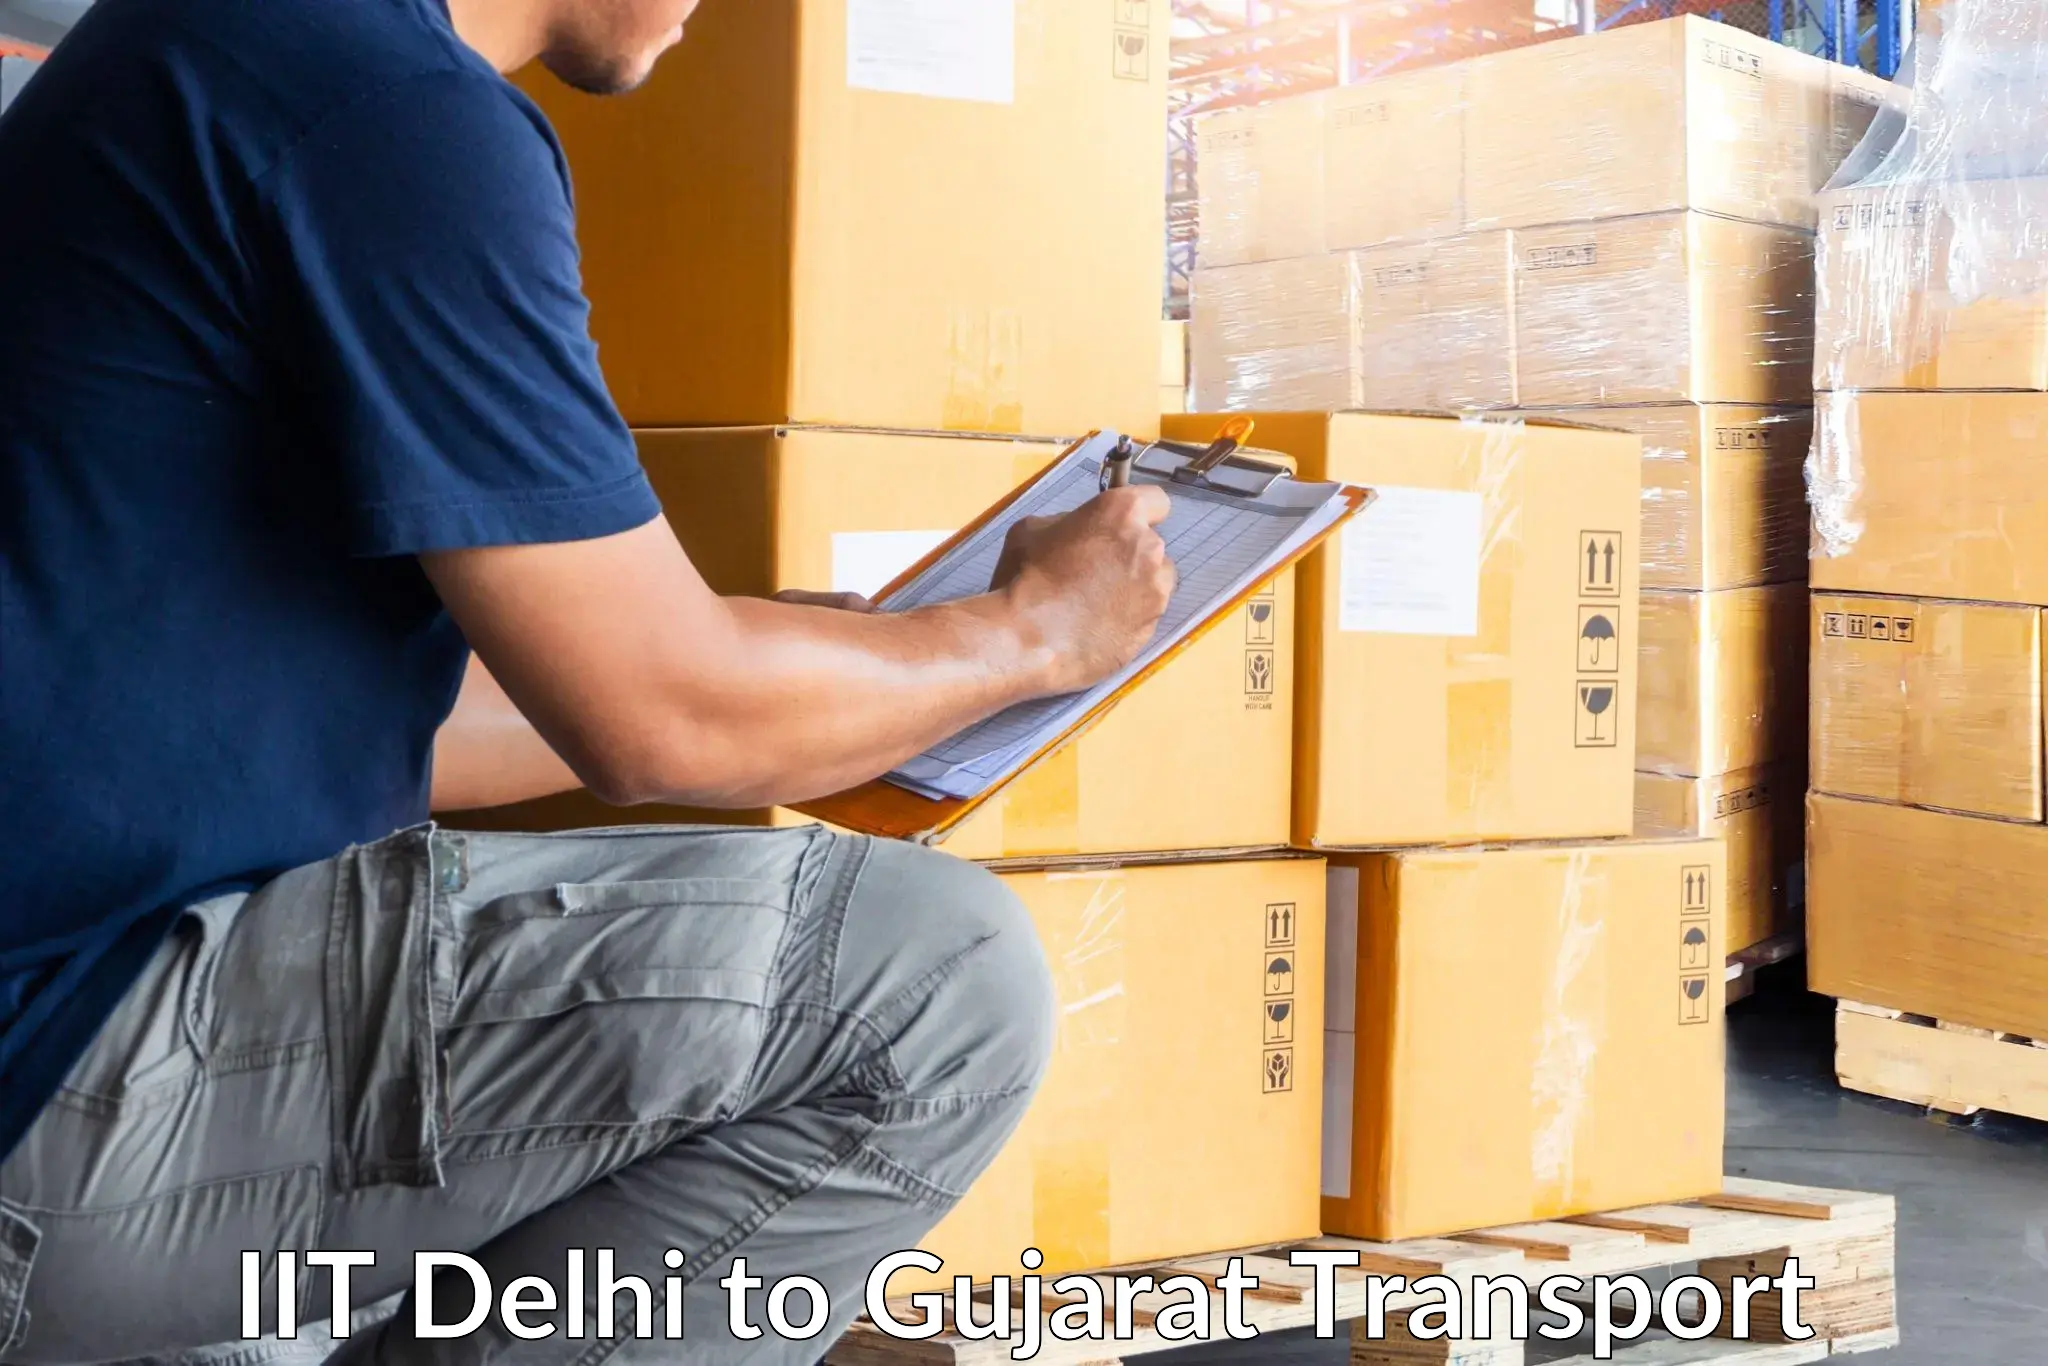 Furniture transport service IIT Delhi to Gujarat